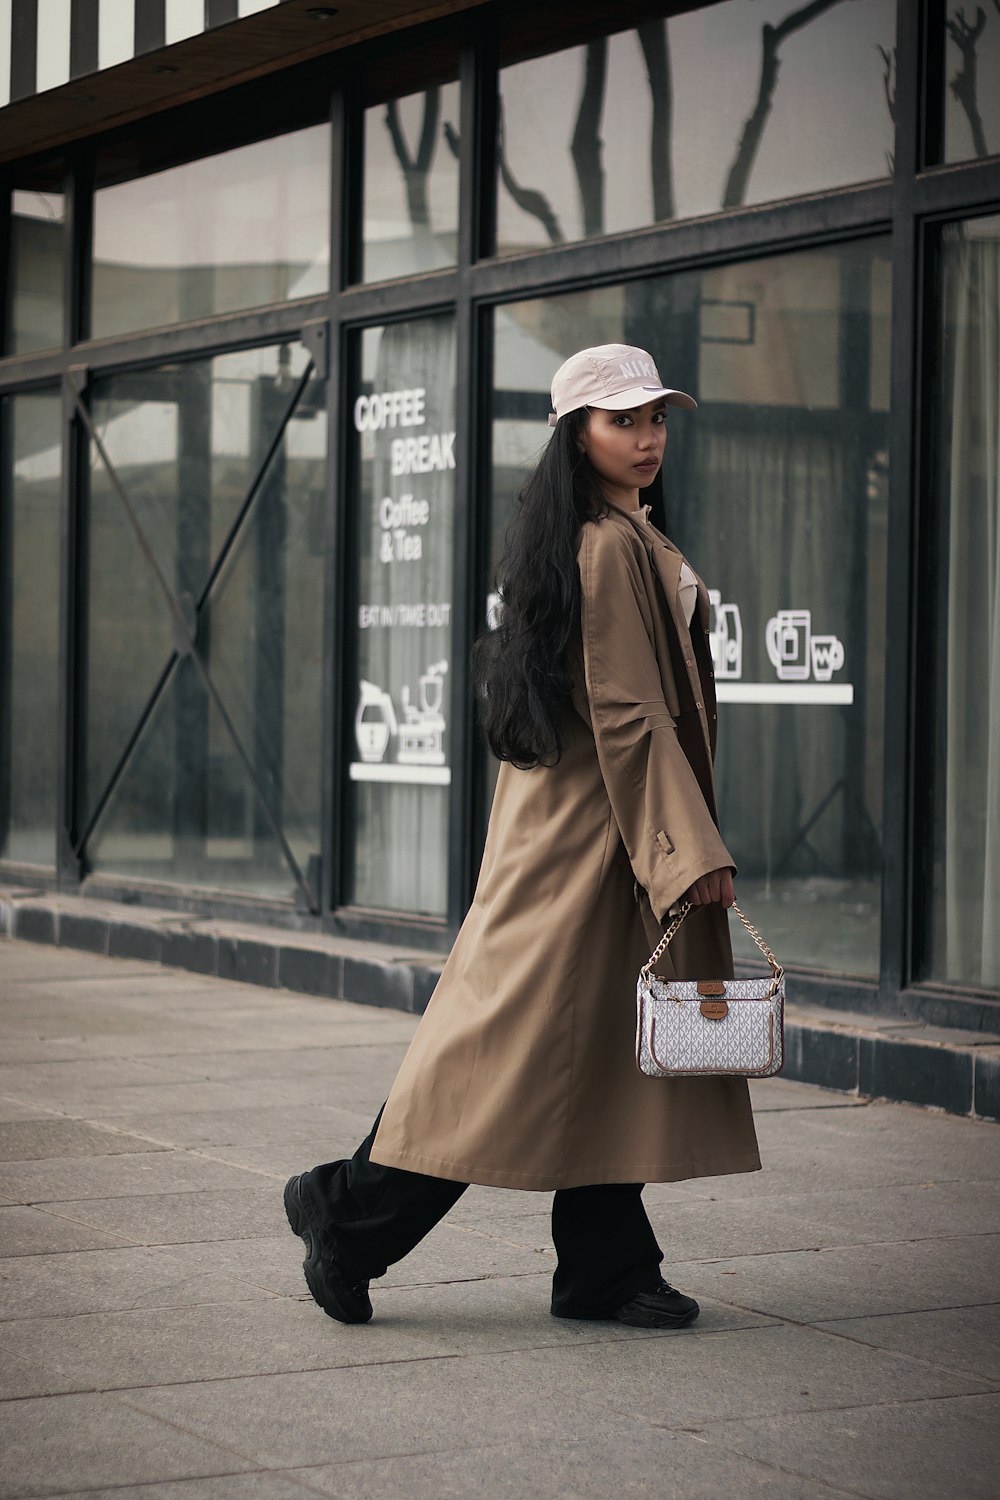 a woman walking down a sidewalk carrying a purse